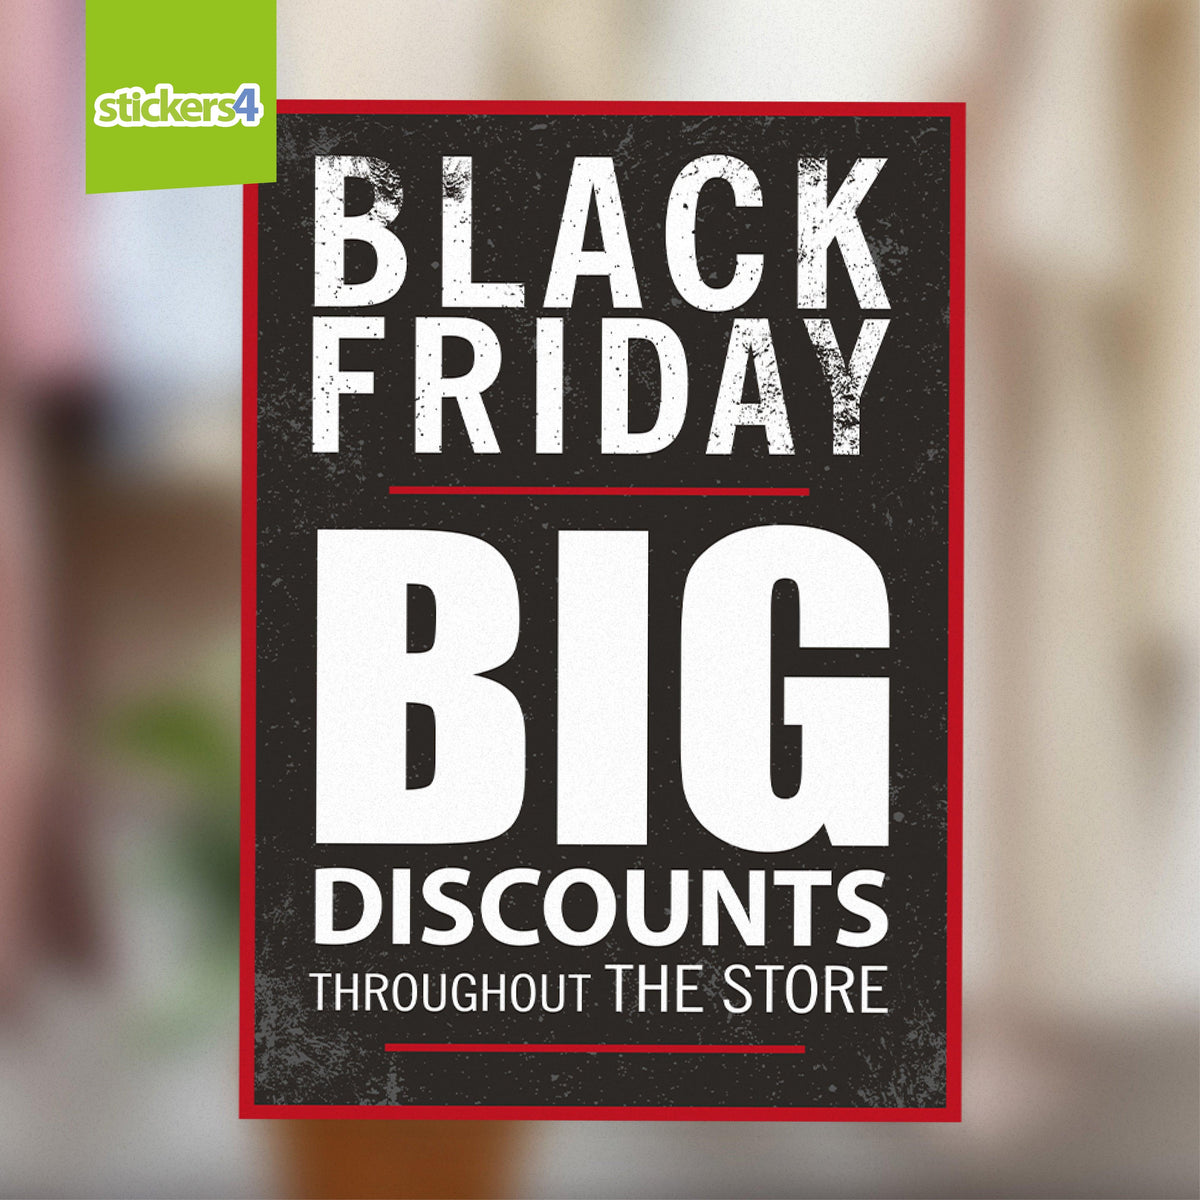 Black Friday BIG Discounts Window Cling Sticker Retail Window Display